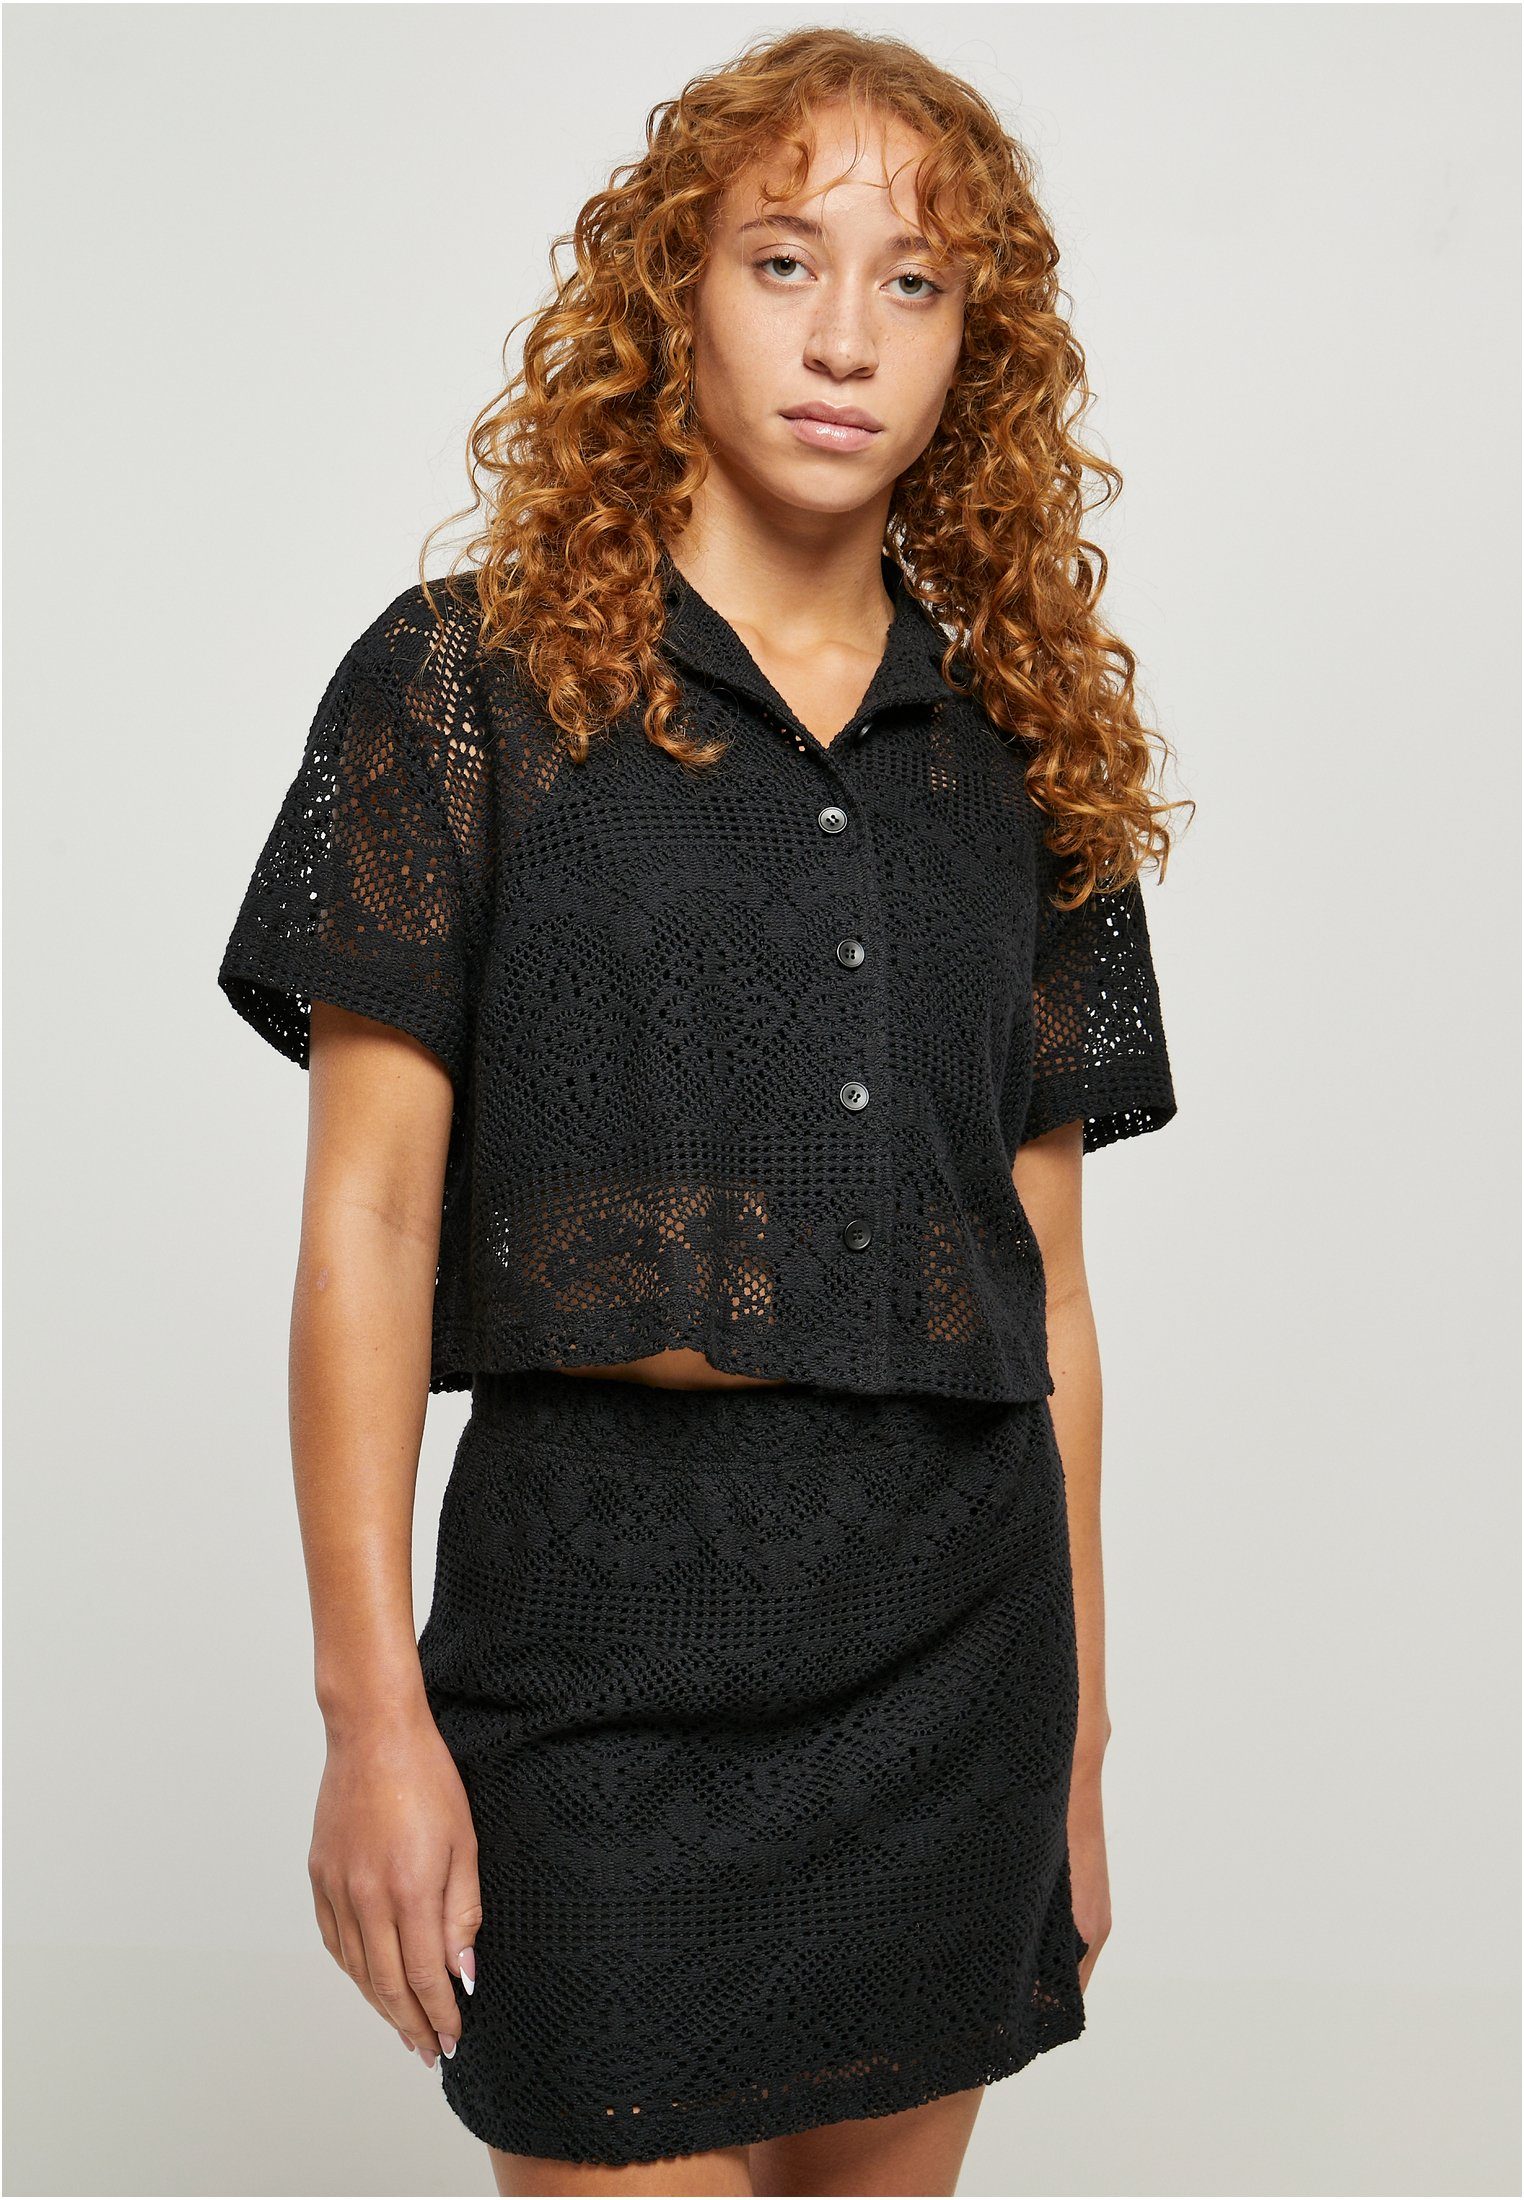 URBAN CLASSICS Damen Resort Ladies Crochet Shirt Bluse Klassische Lace